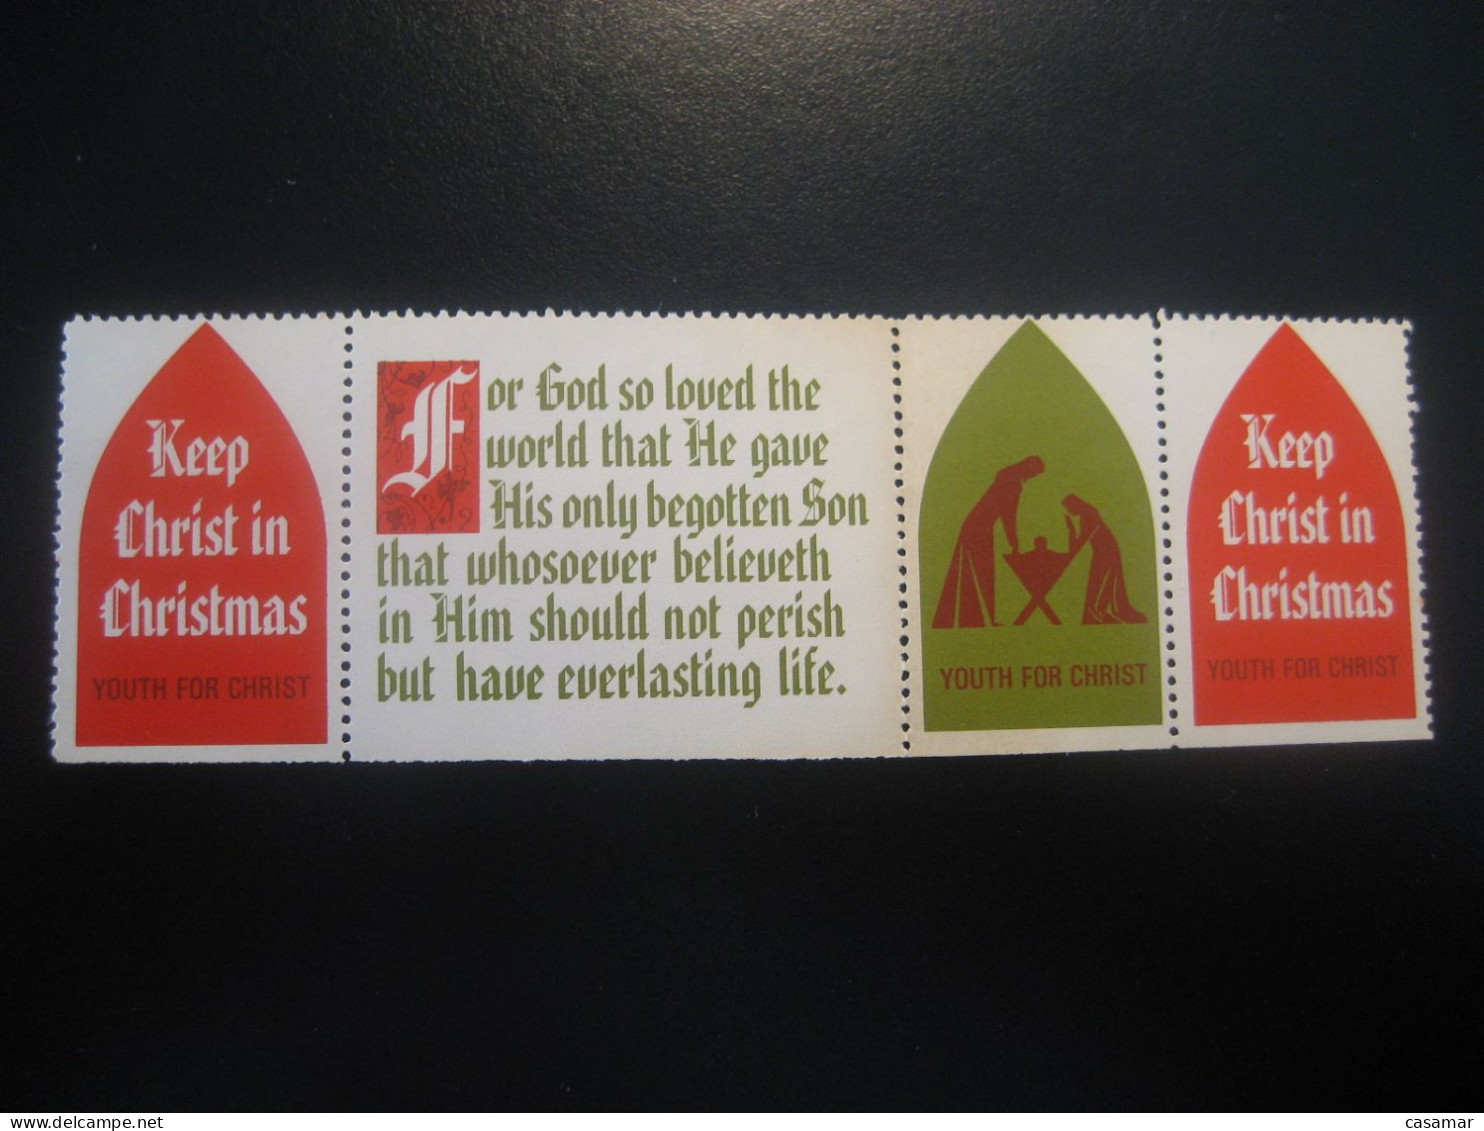 Keep Christ In Christmas 4 Poster Stamp Vignette USA Label - Christianisme